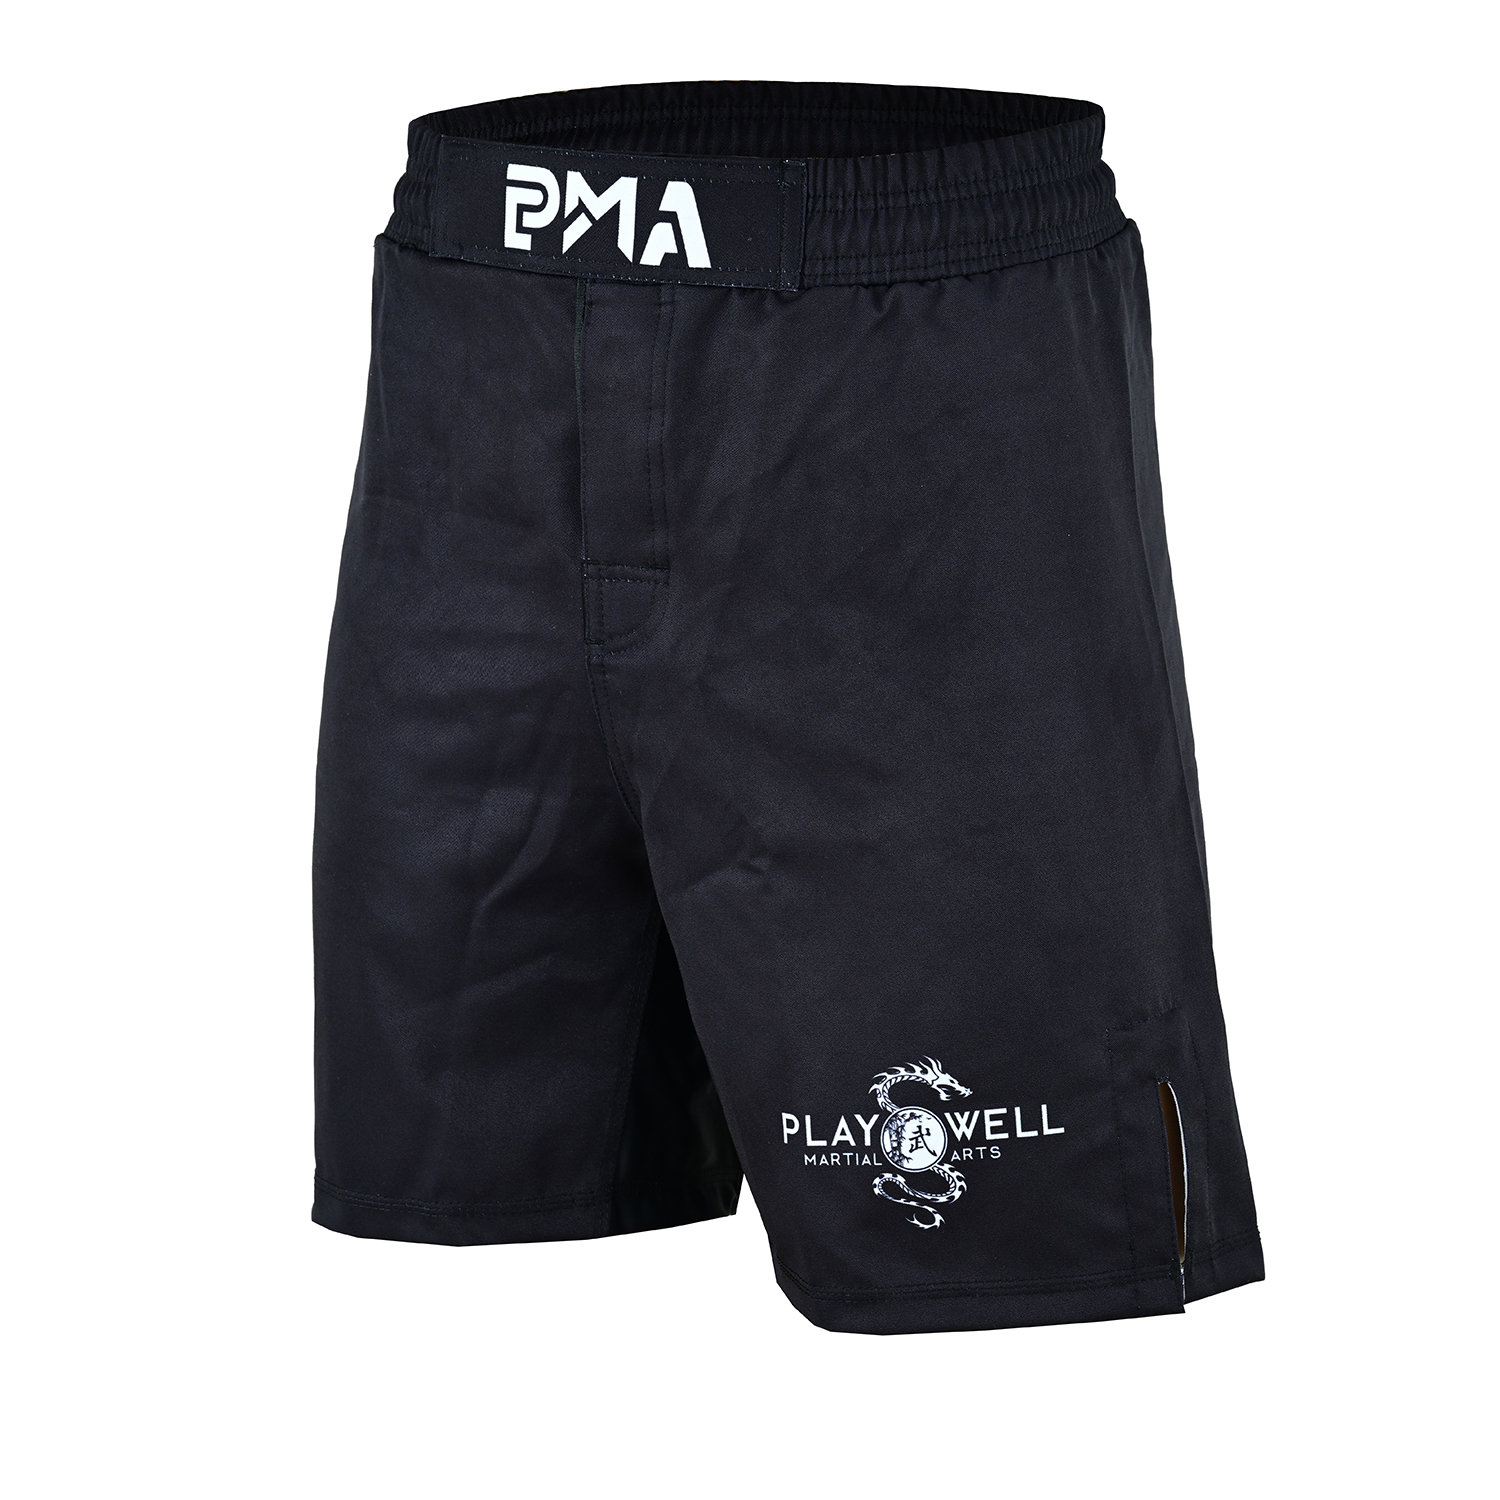 Playwell Pro MMA Plain Black No Gi Training Shorts - Click Image to Close